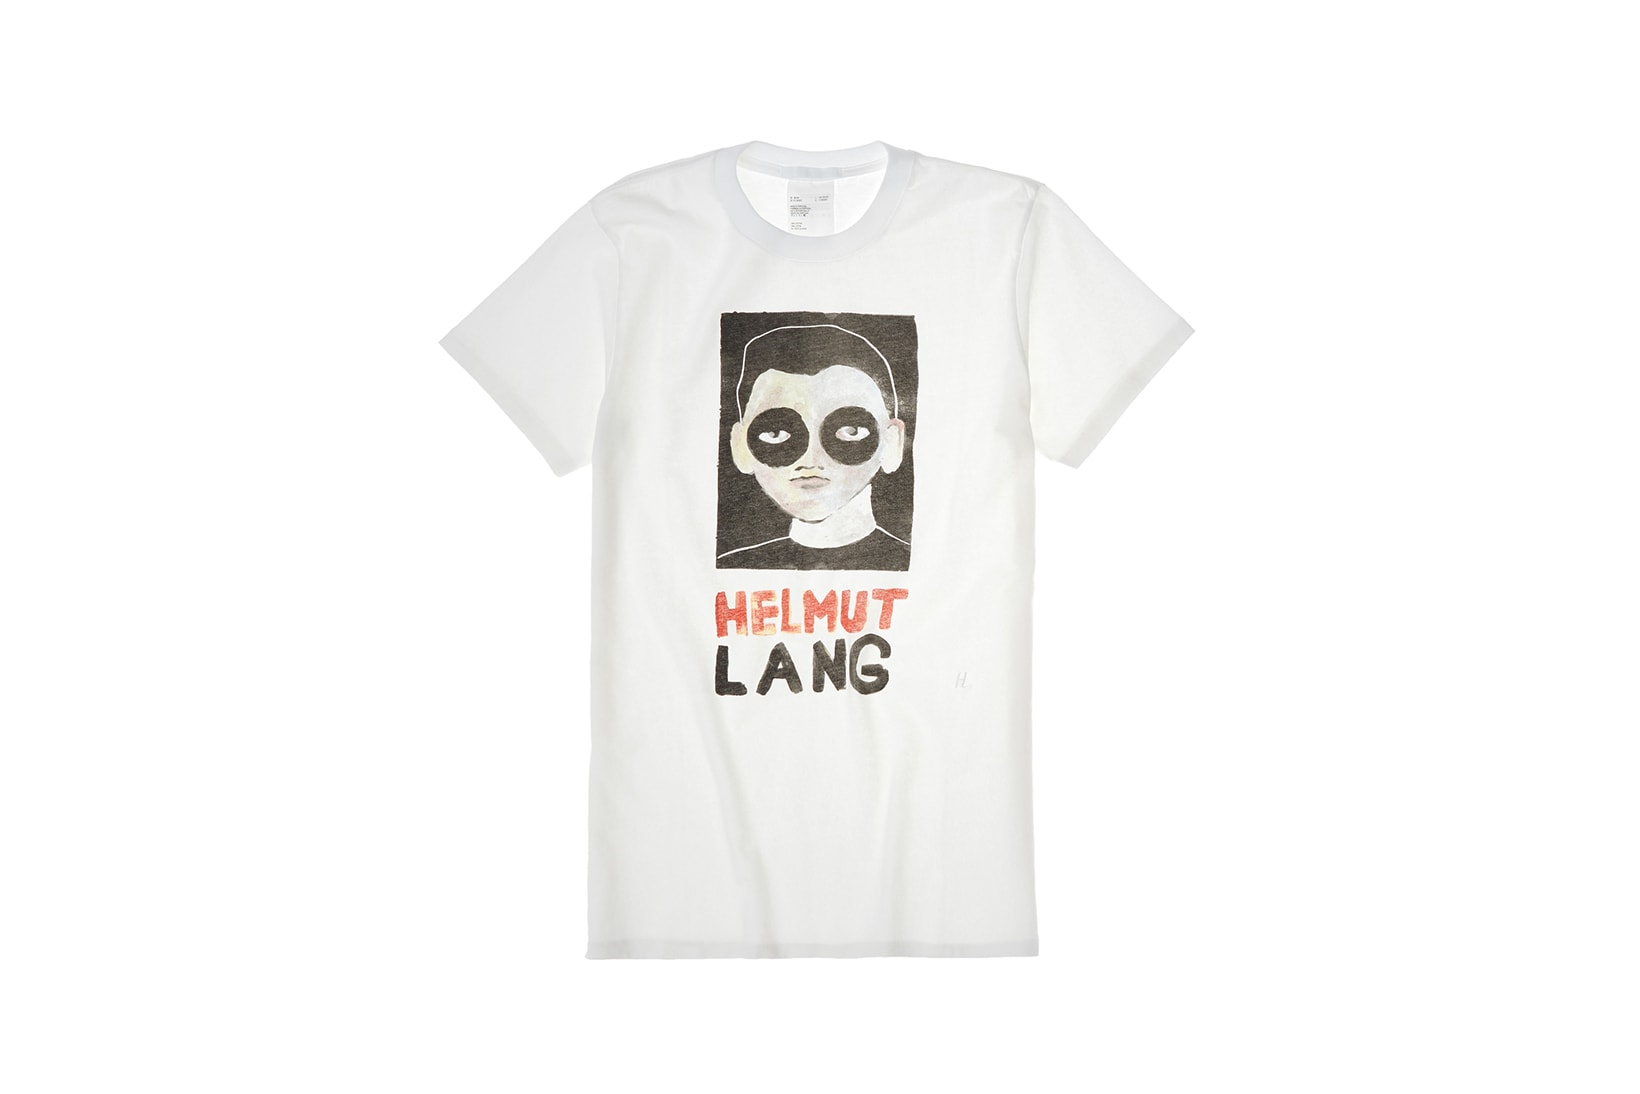 Helmut Lang T-Shirt Design Contest Winners Face Mask Painting